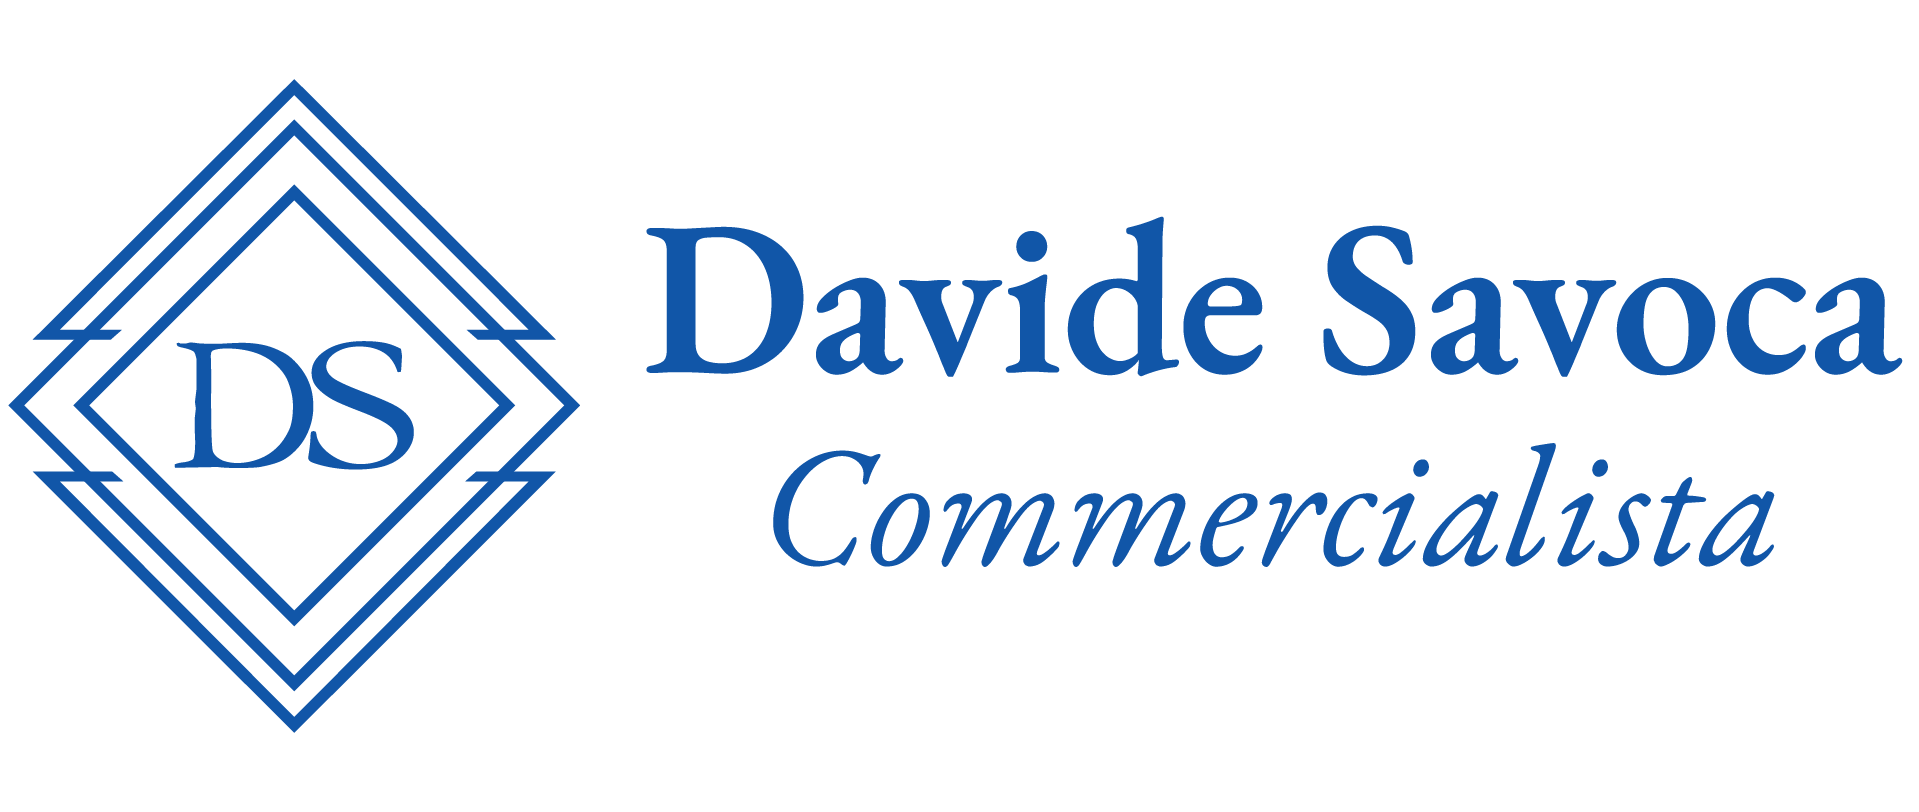 Davide Savoca commercialista logo